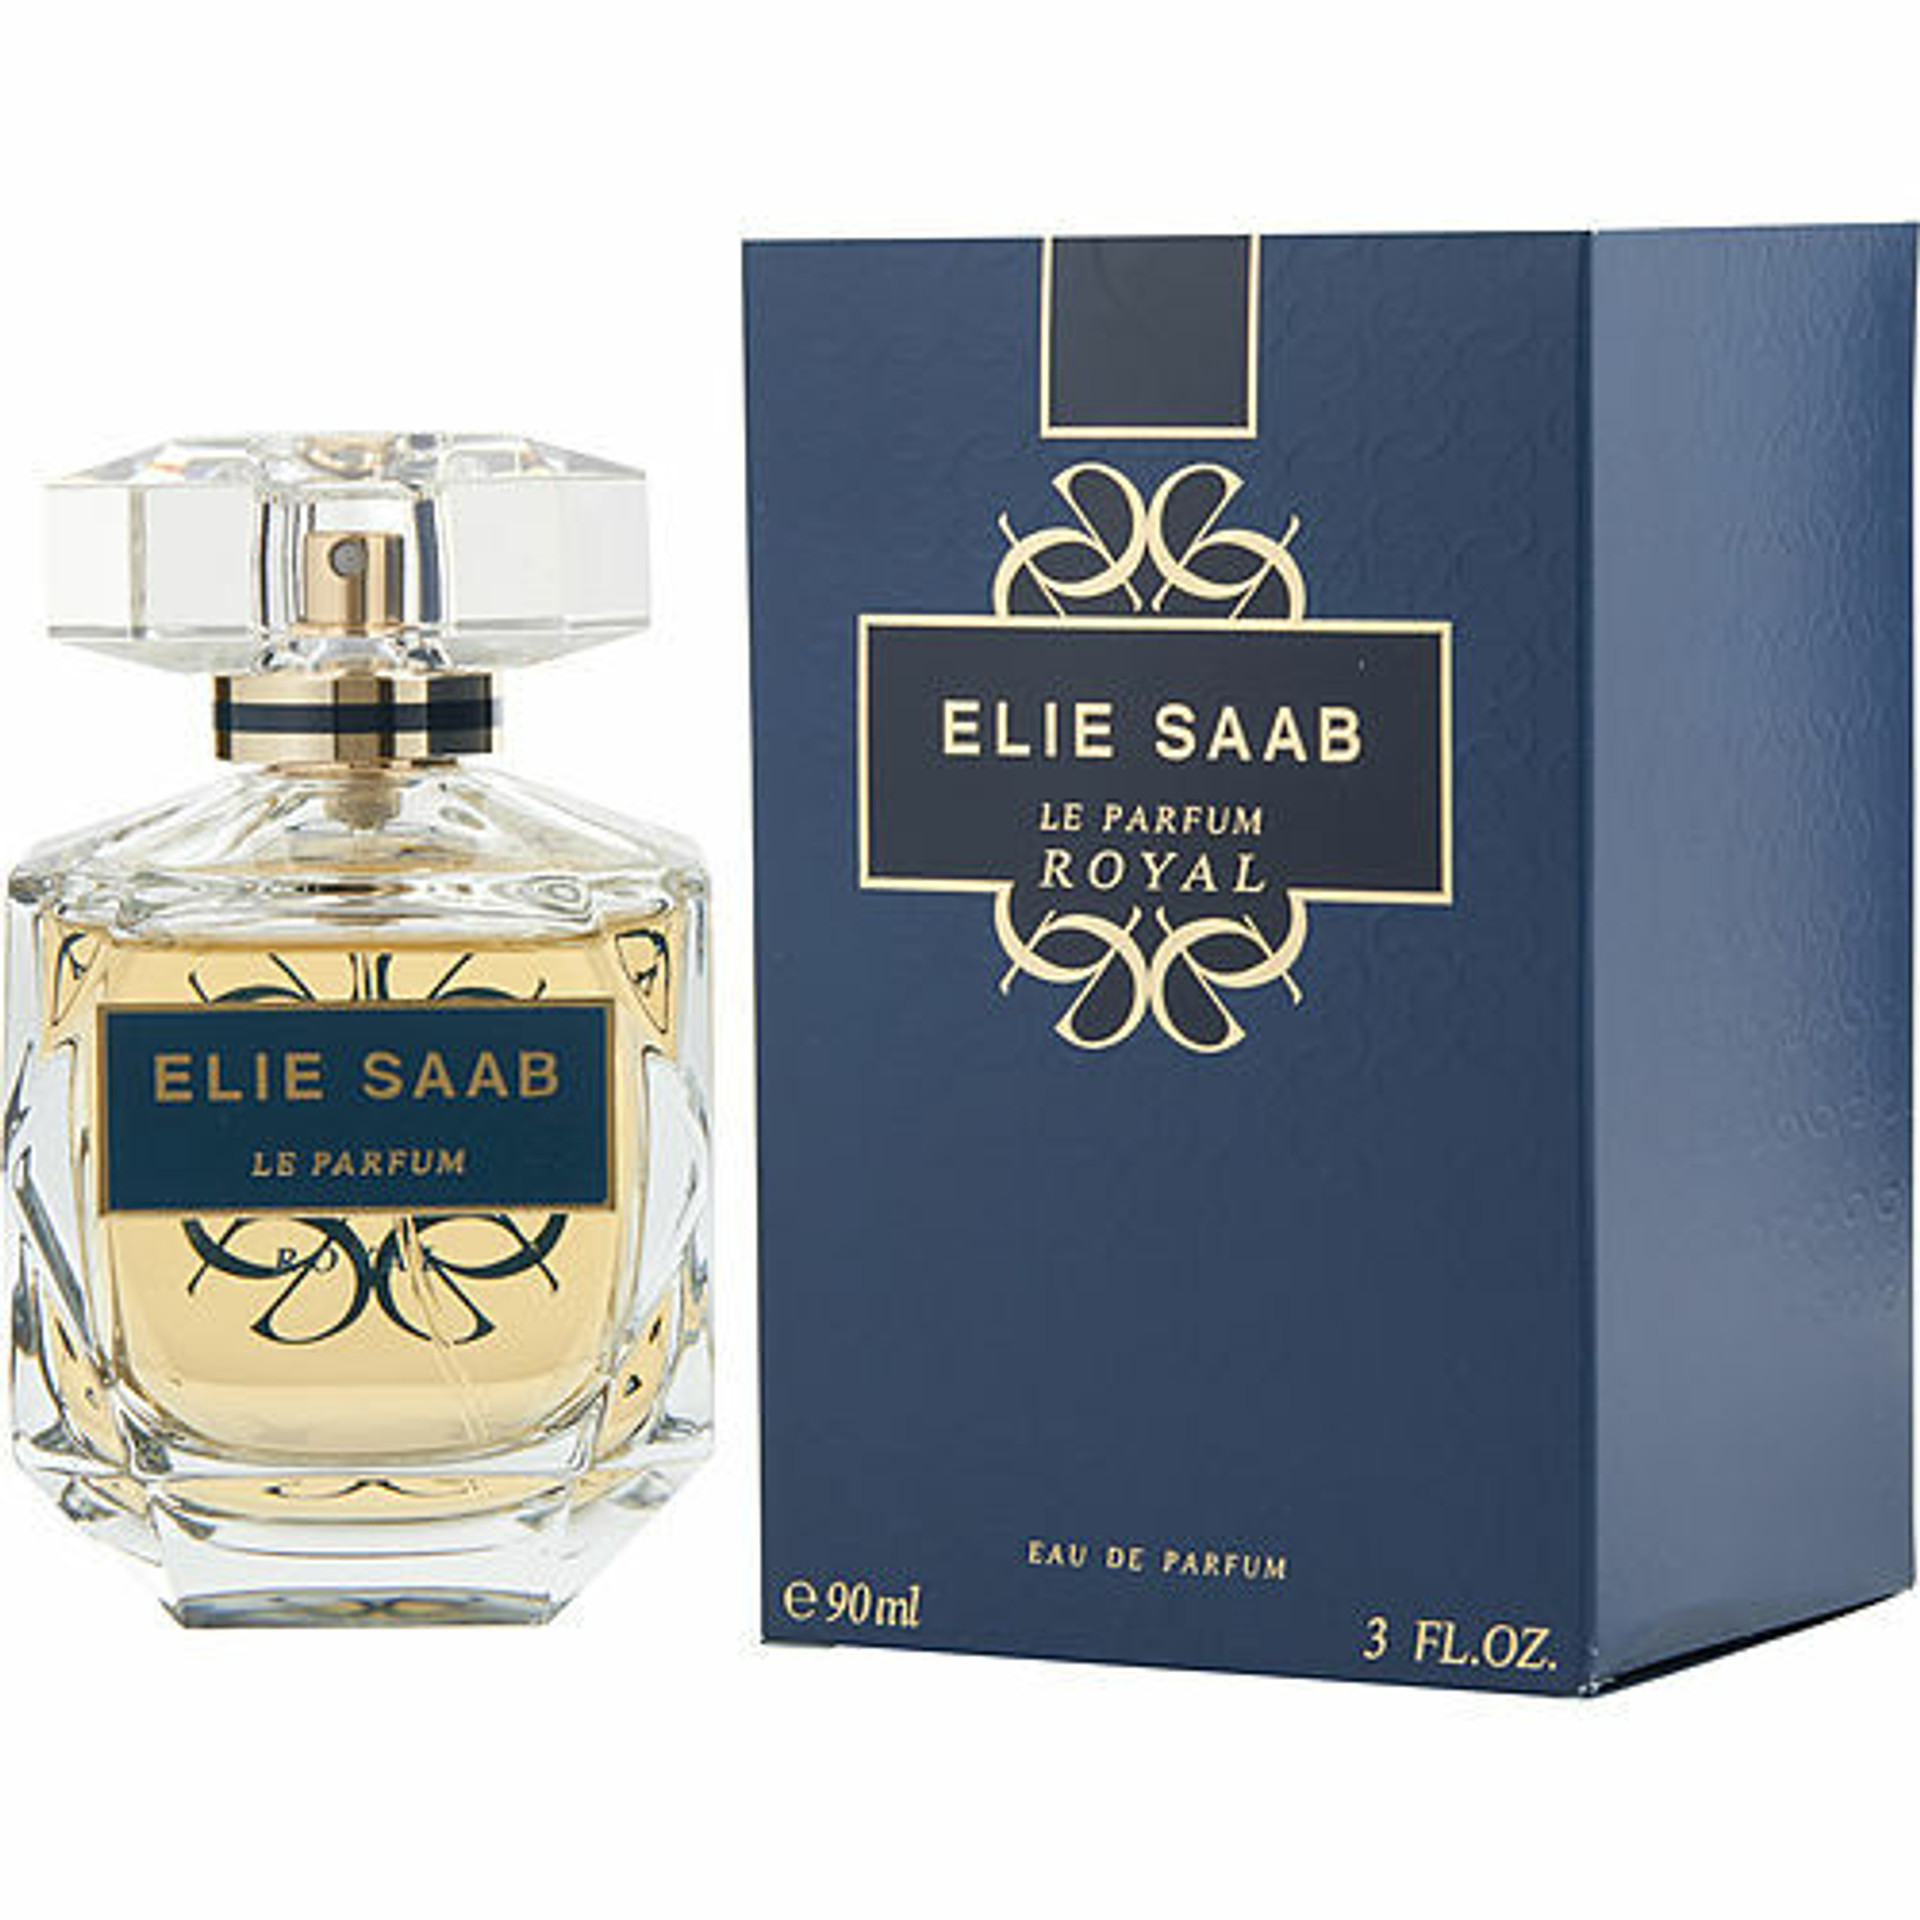 Elie Saab Le Parfum Royal by Elie Saab Eau De Parfum Spray 3 oz ...